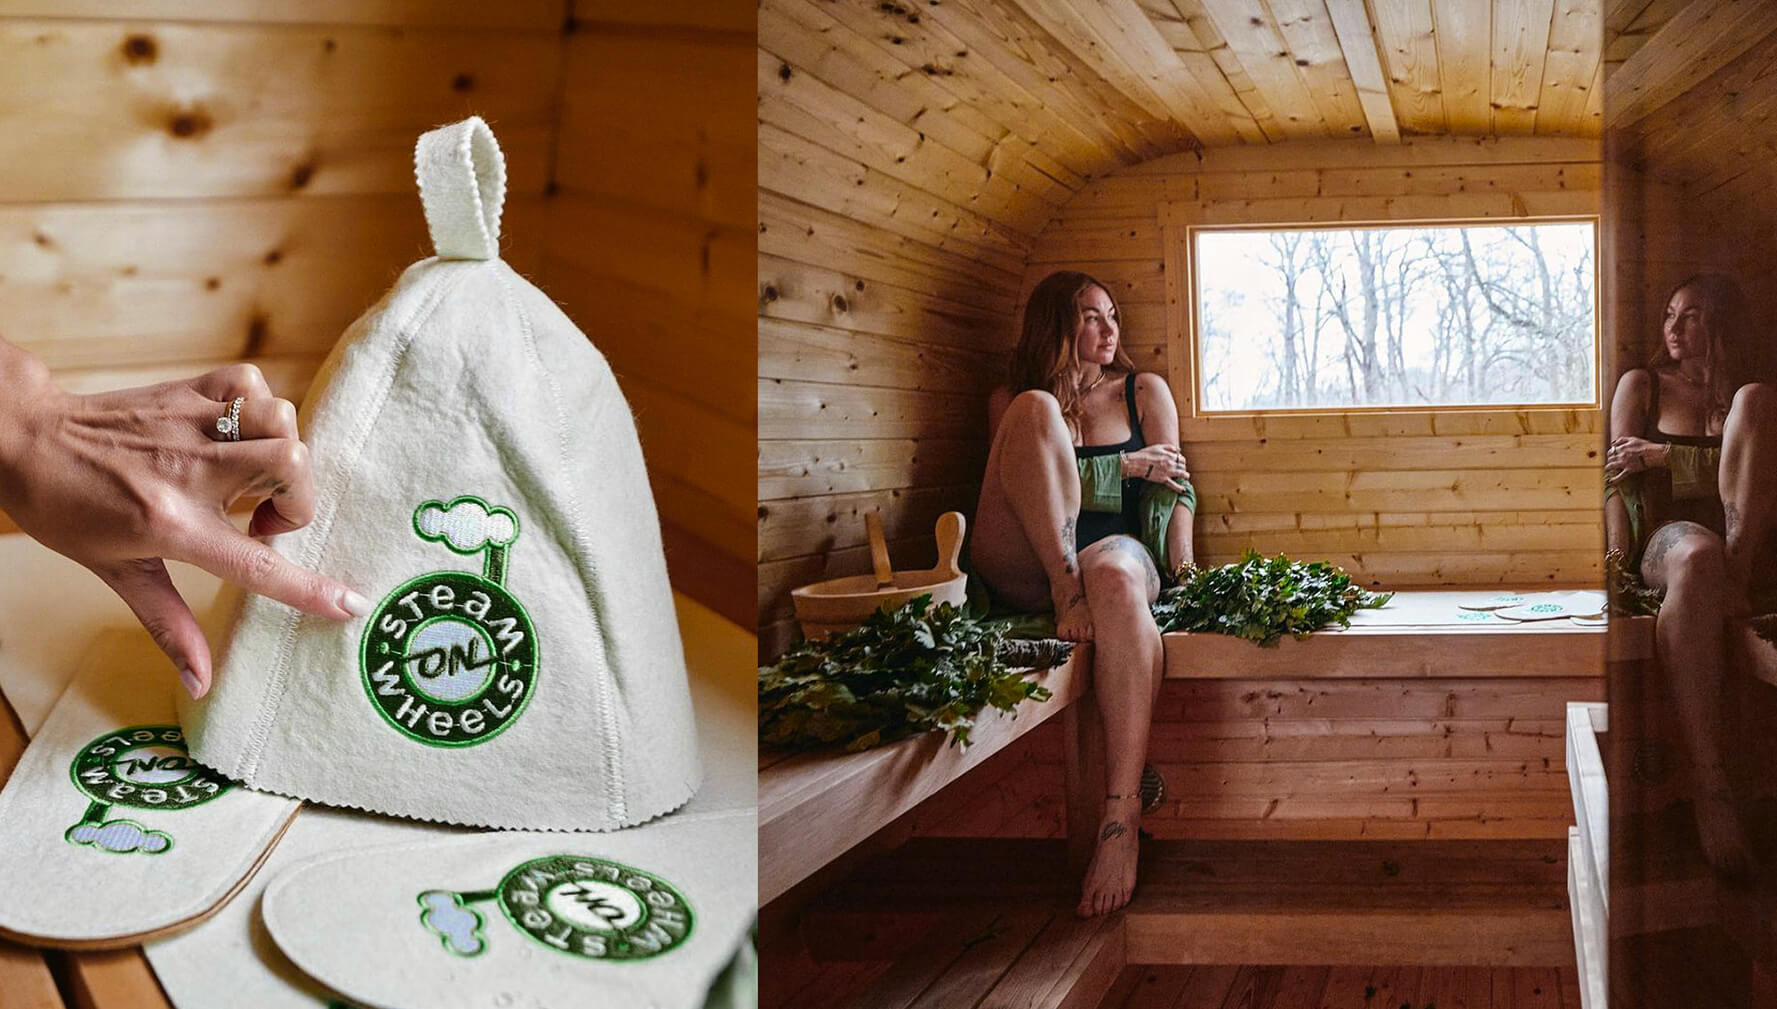 Sauna hats and Lady inside sauna